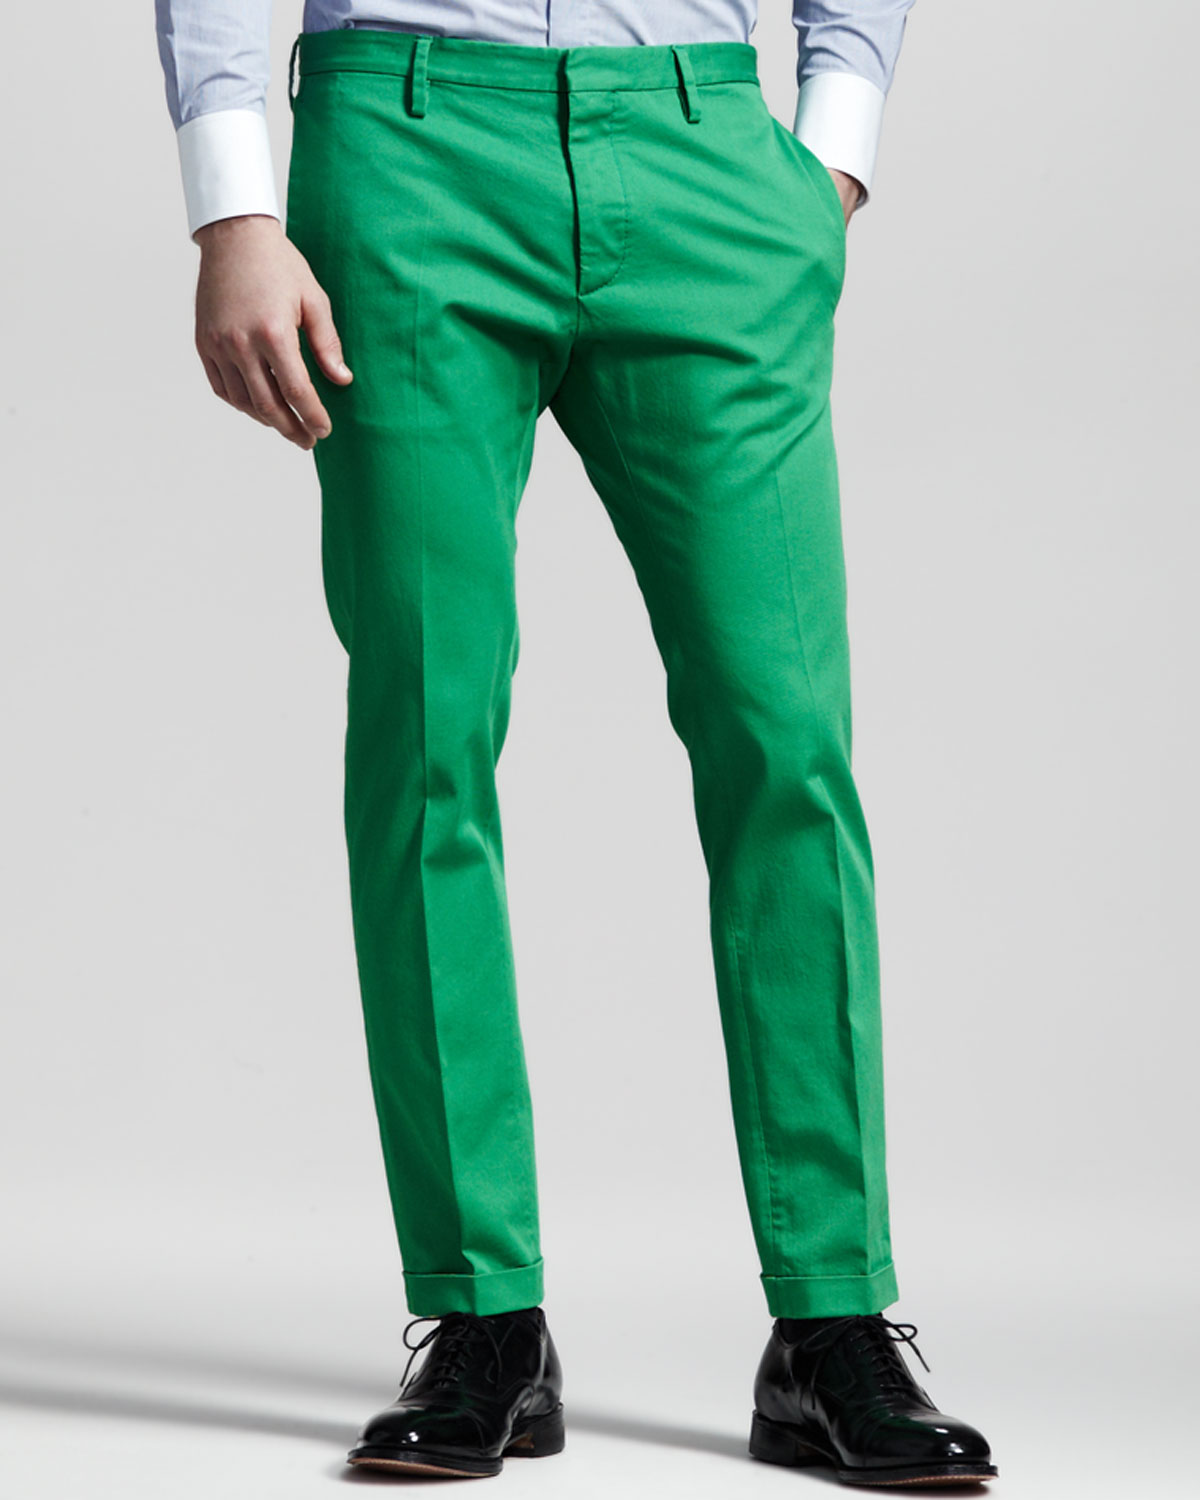 Green Twill Pants | Pant So